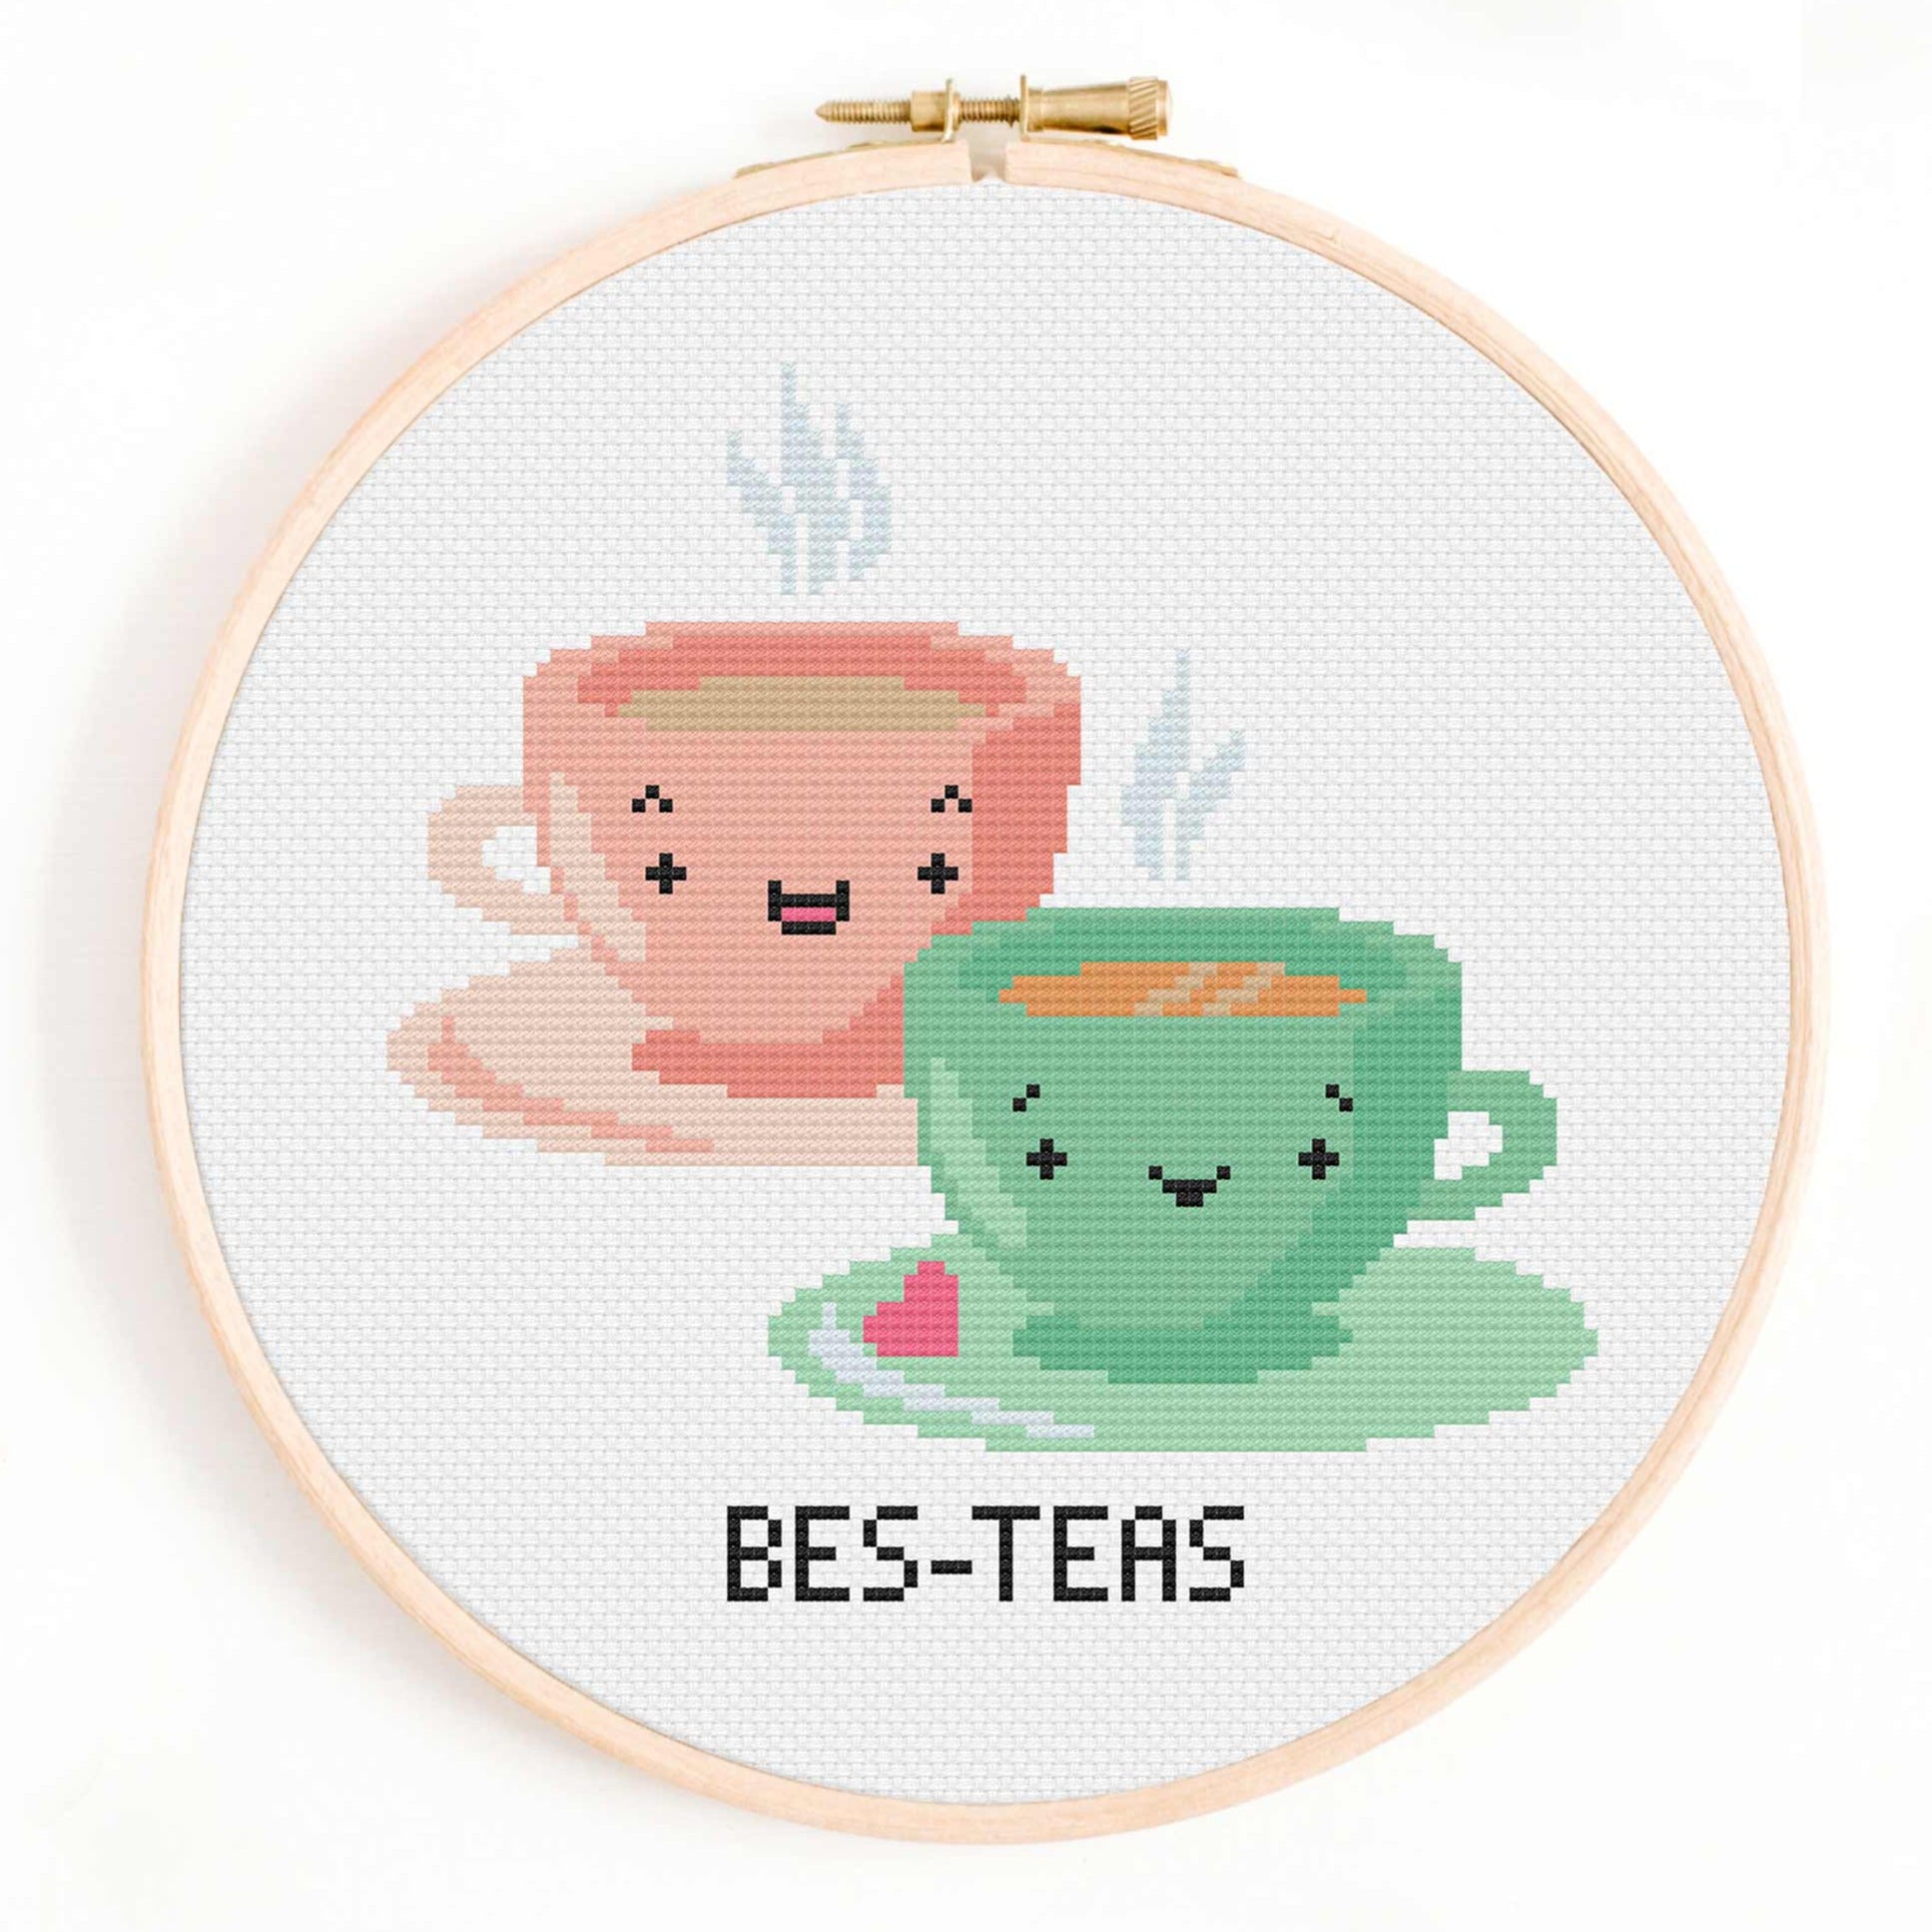 Bes-Teas Cross Stitch Pattern